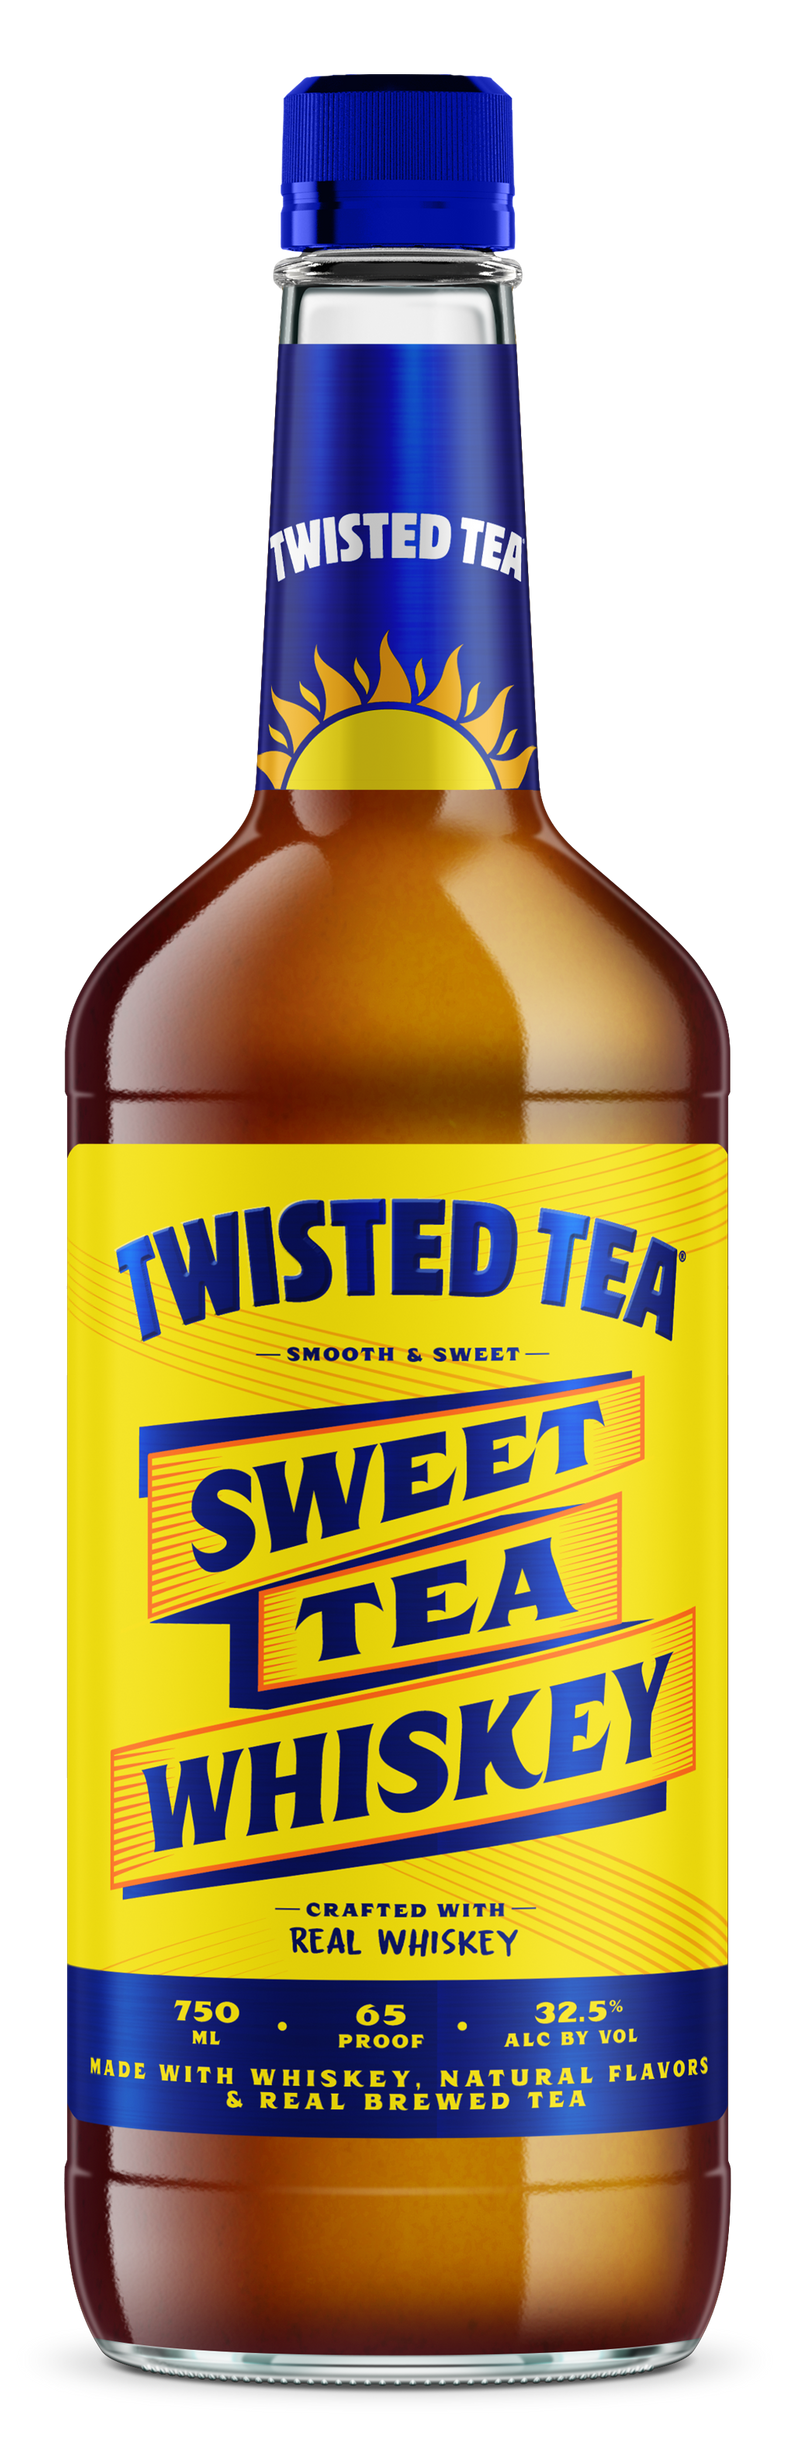 TWISTED TEA WHISKEY